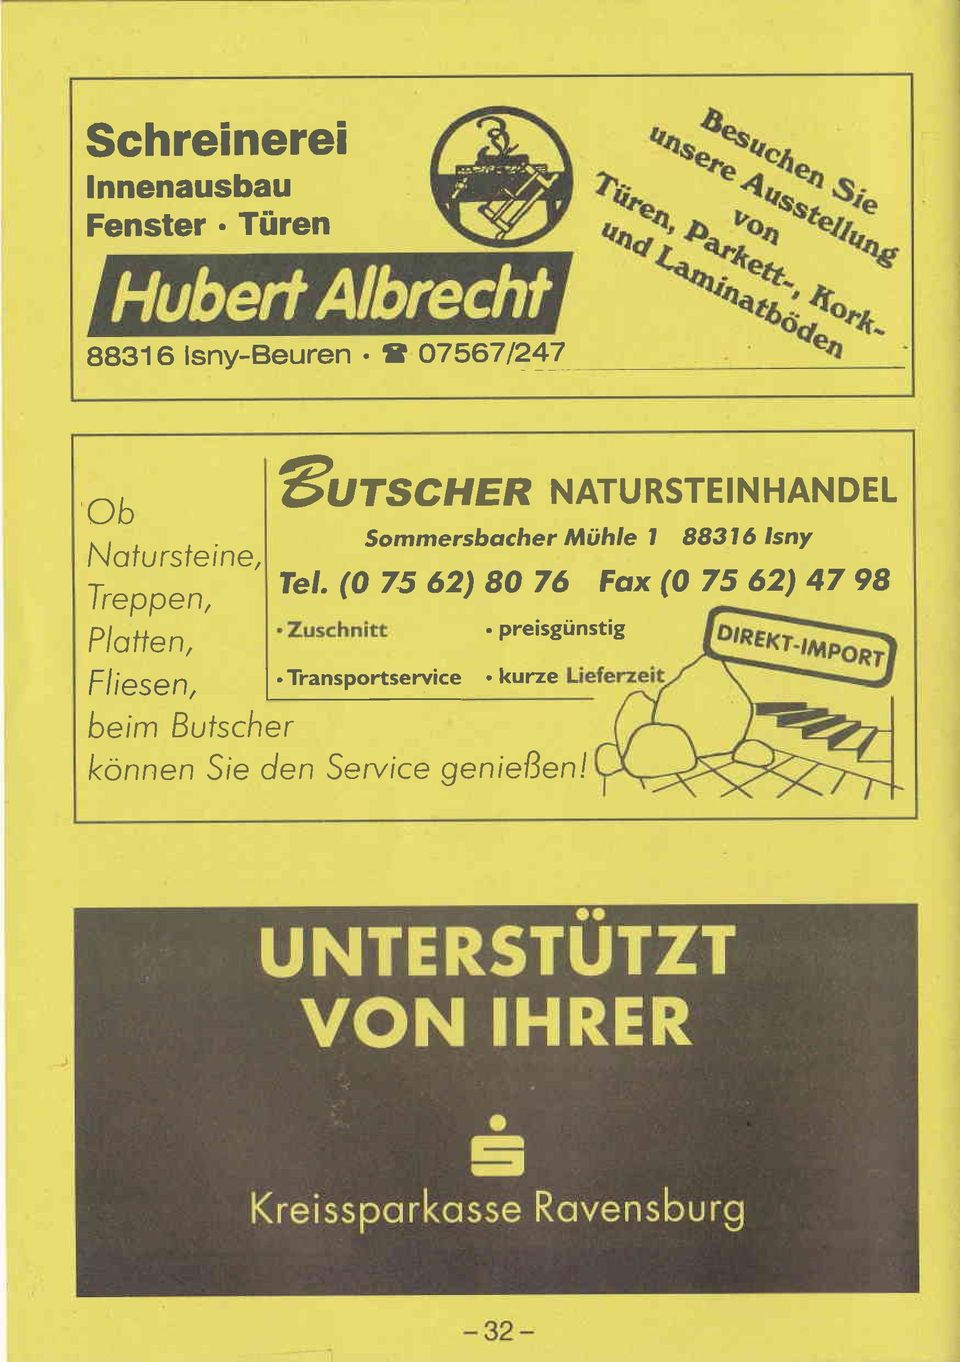 Smmersbacher Mühle 88316snY Tel. (O s 6) 80 6 Fax (O s 6) 4 98.